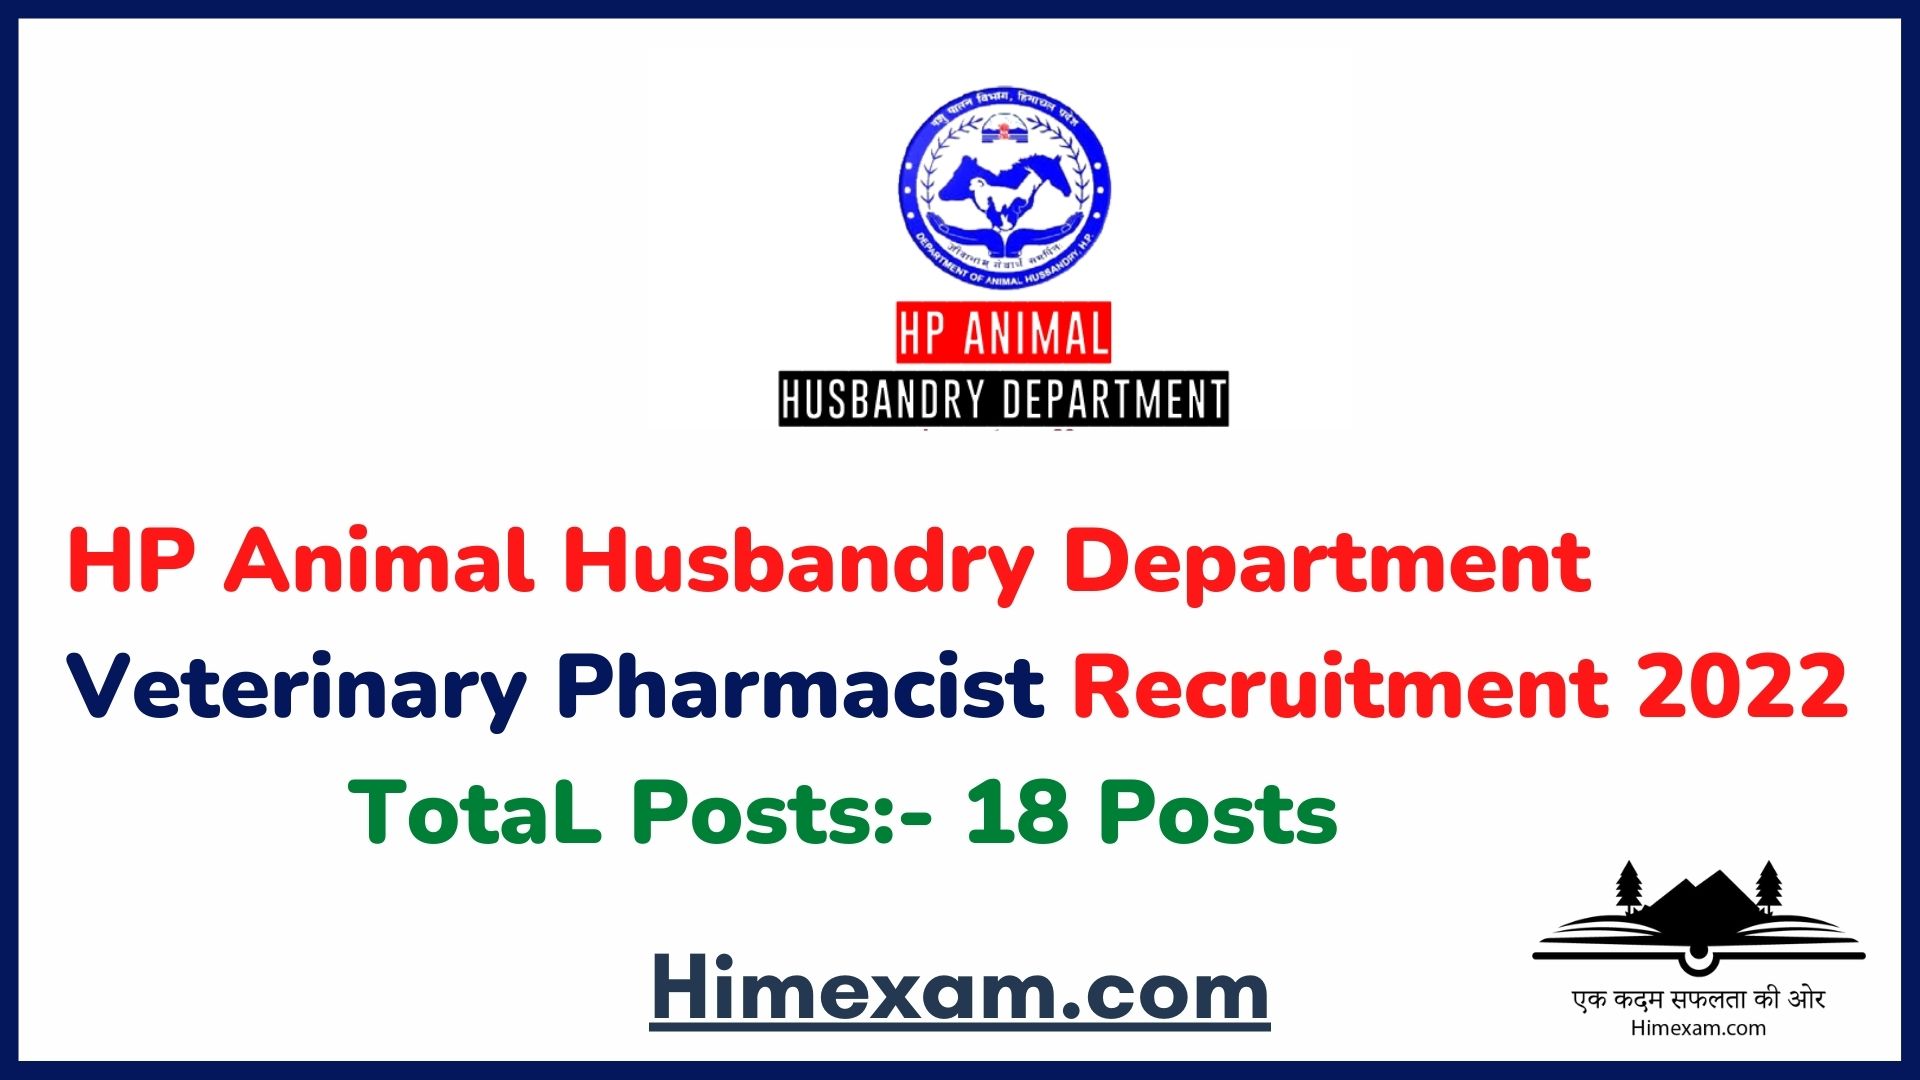 HP Animal Husbandry Department Veterinary Pharmacist Recruitment 2022